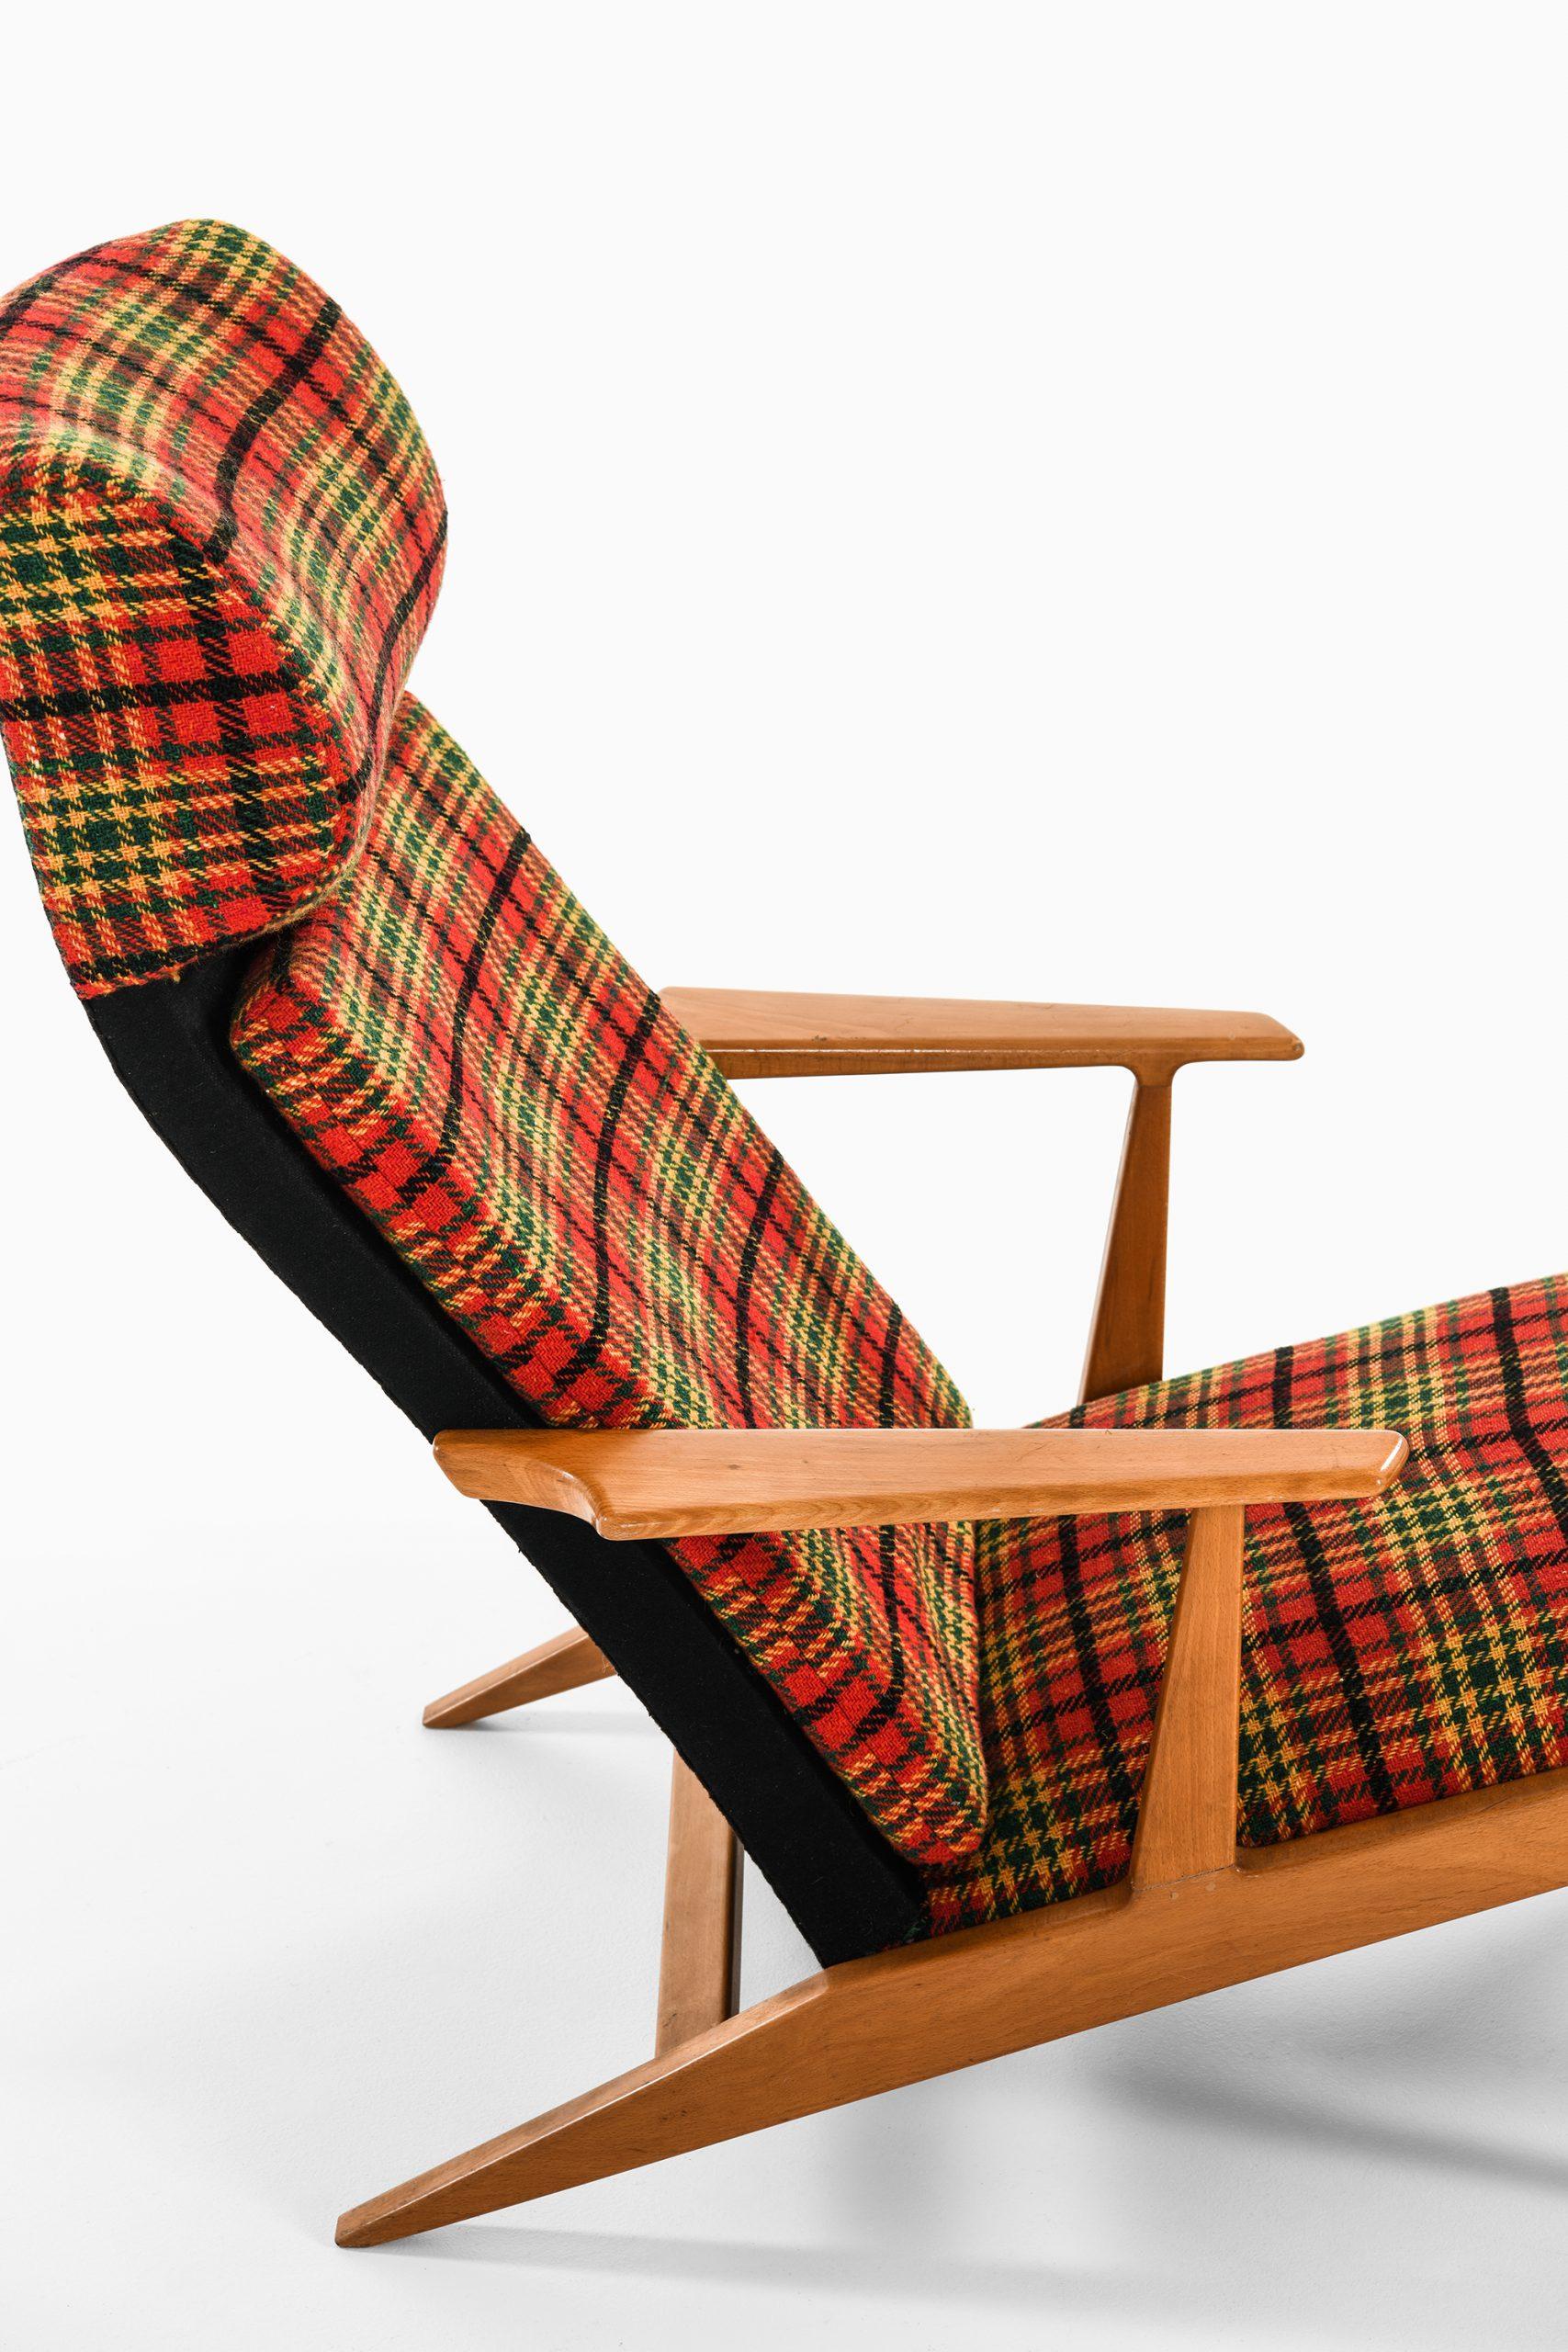 Svante Skogh Lounge Chair Produced by Engen Möbler in Sweden In Good Condition For Sale In Limhamn, Skåne län